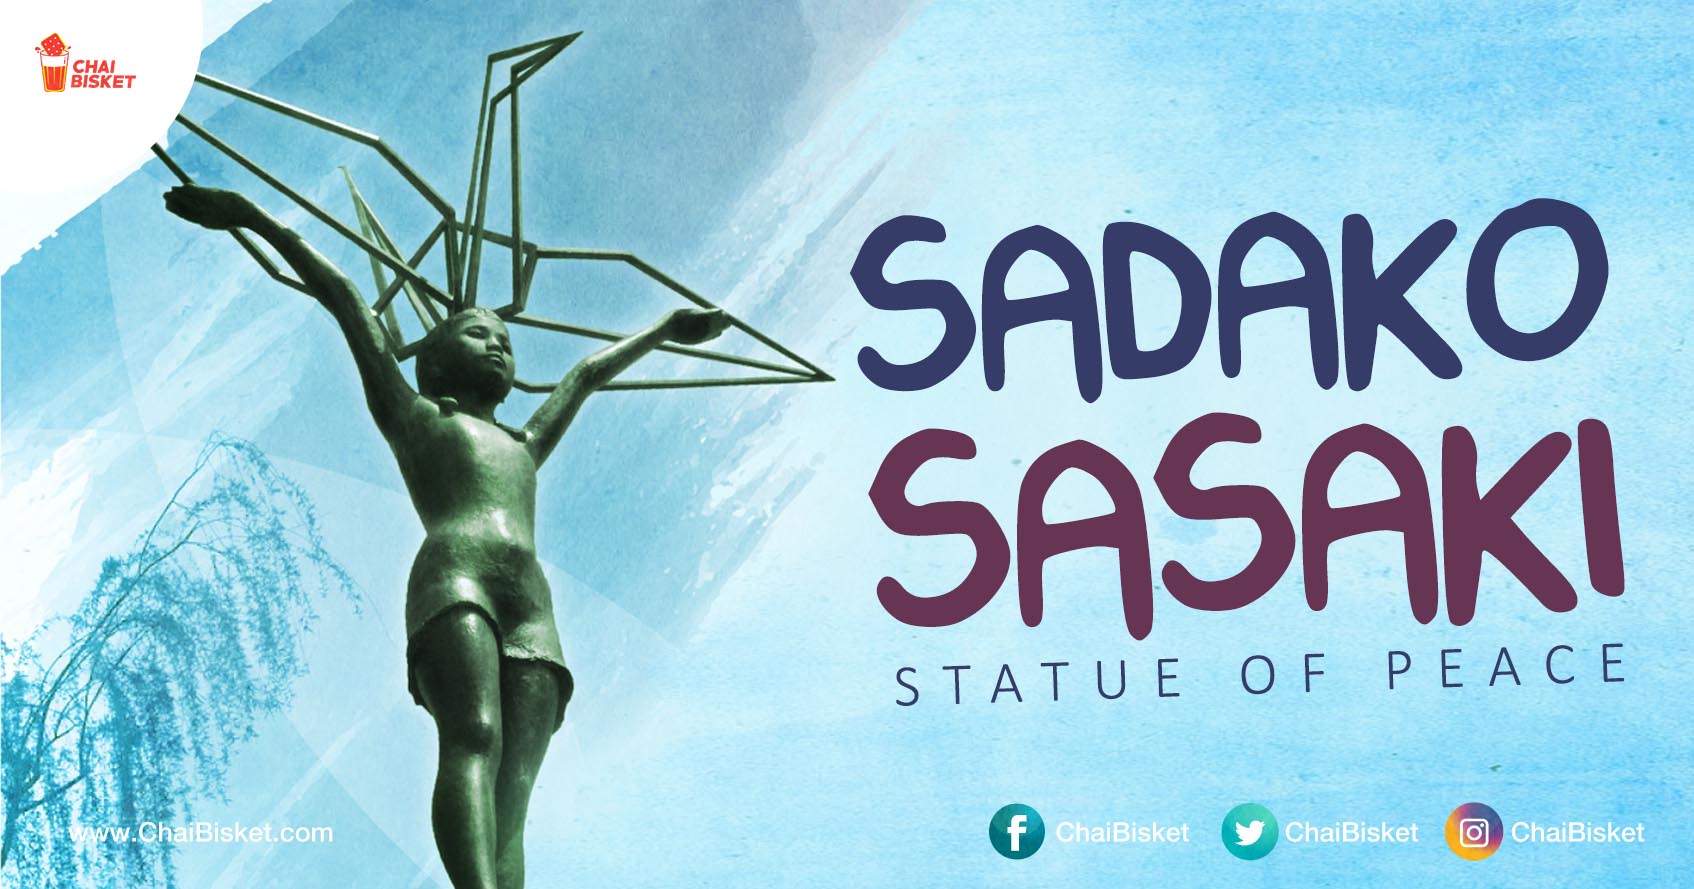 Here S The Emotional Real Story Behind Japan S Statue Of Peace Sadako Sasaki Chai Bisket